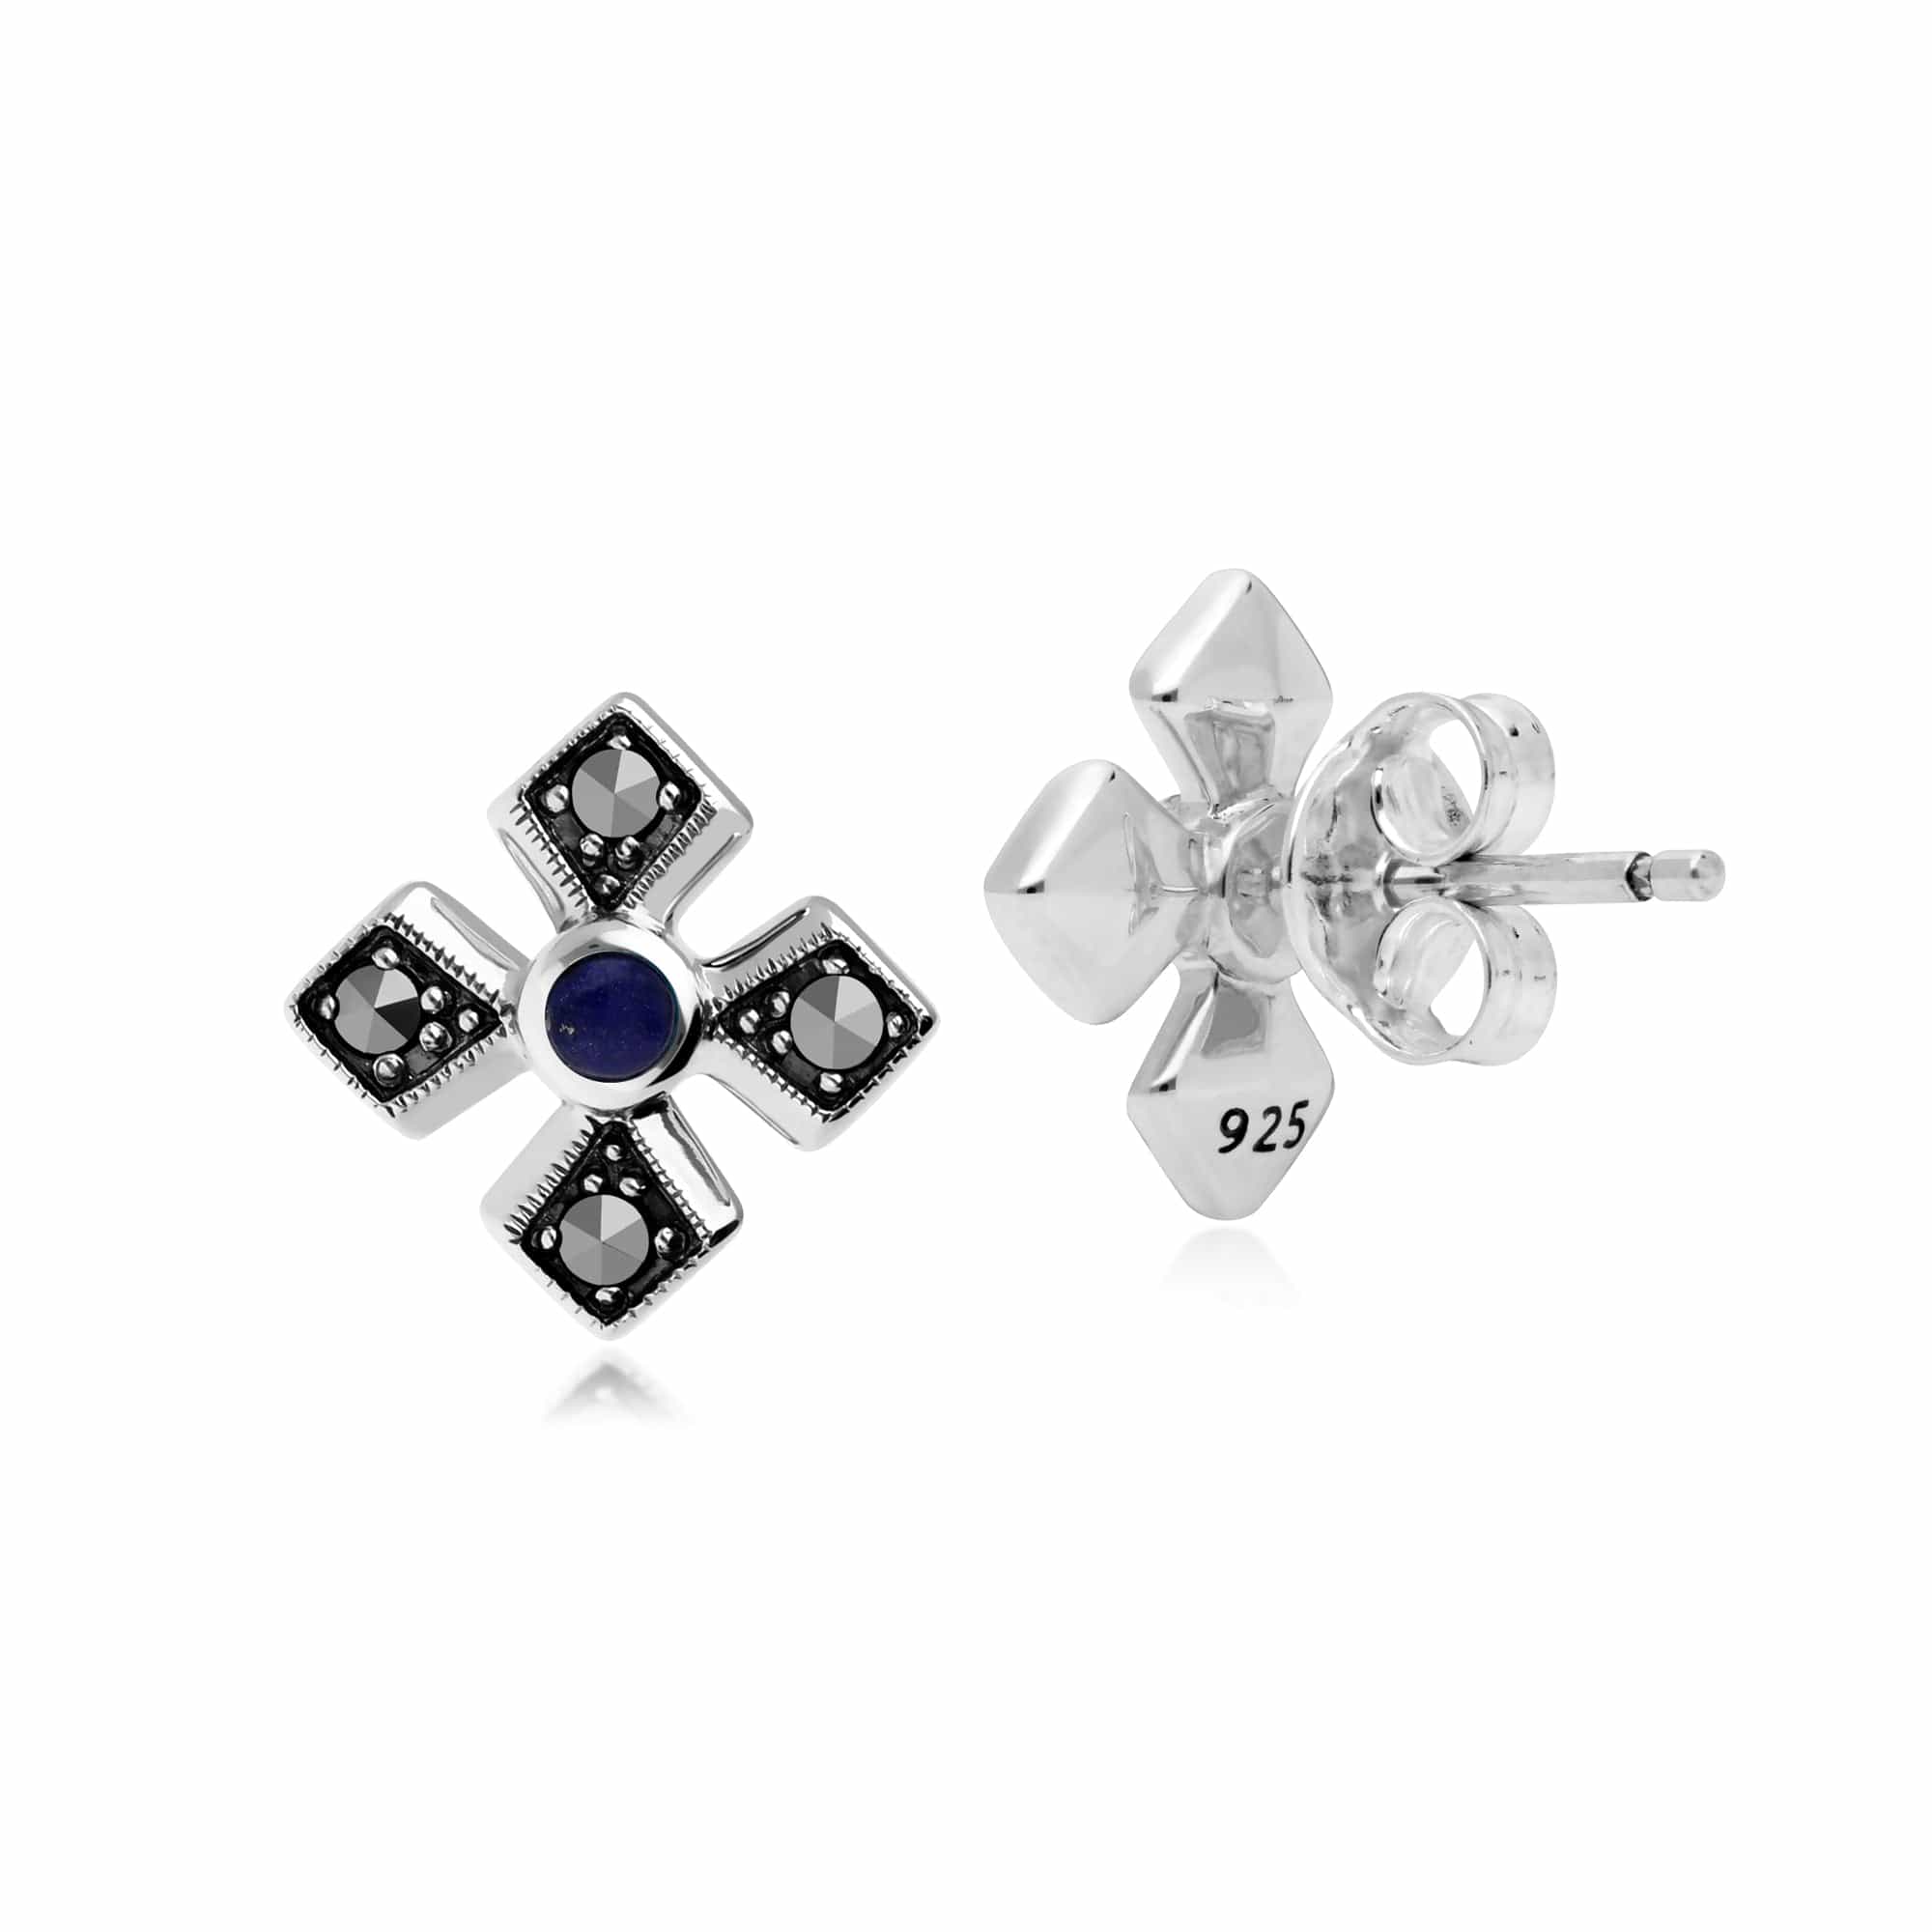 214E859903925 Gemondo Sterling Silver Marcasite & Lapis Lazuli Earring 2